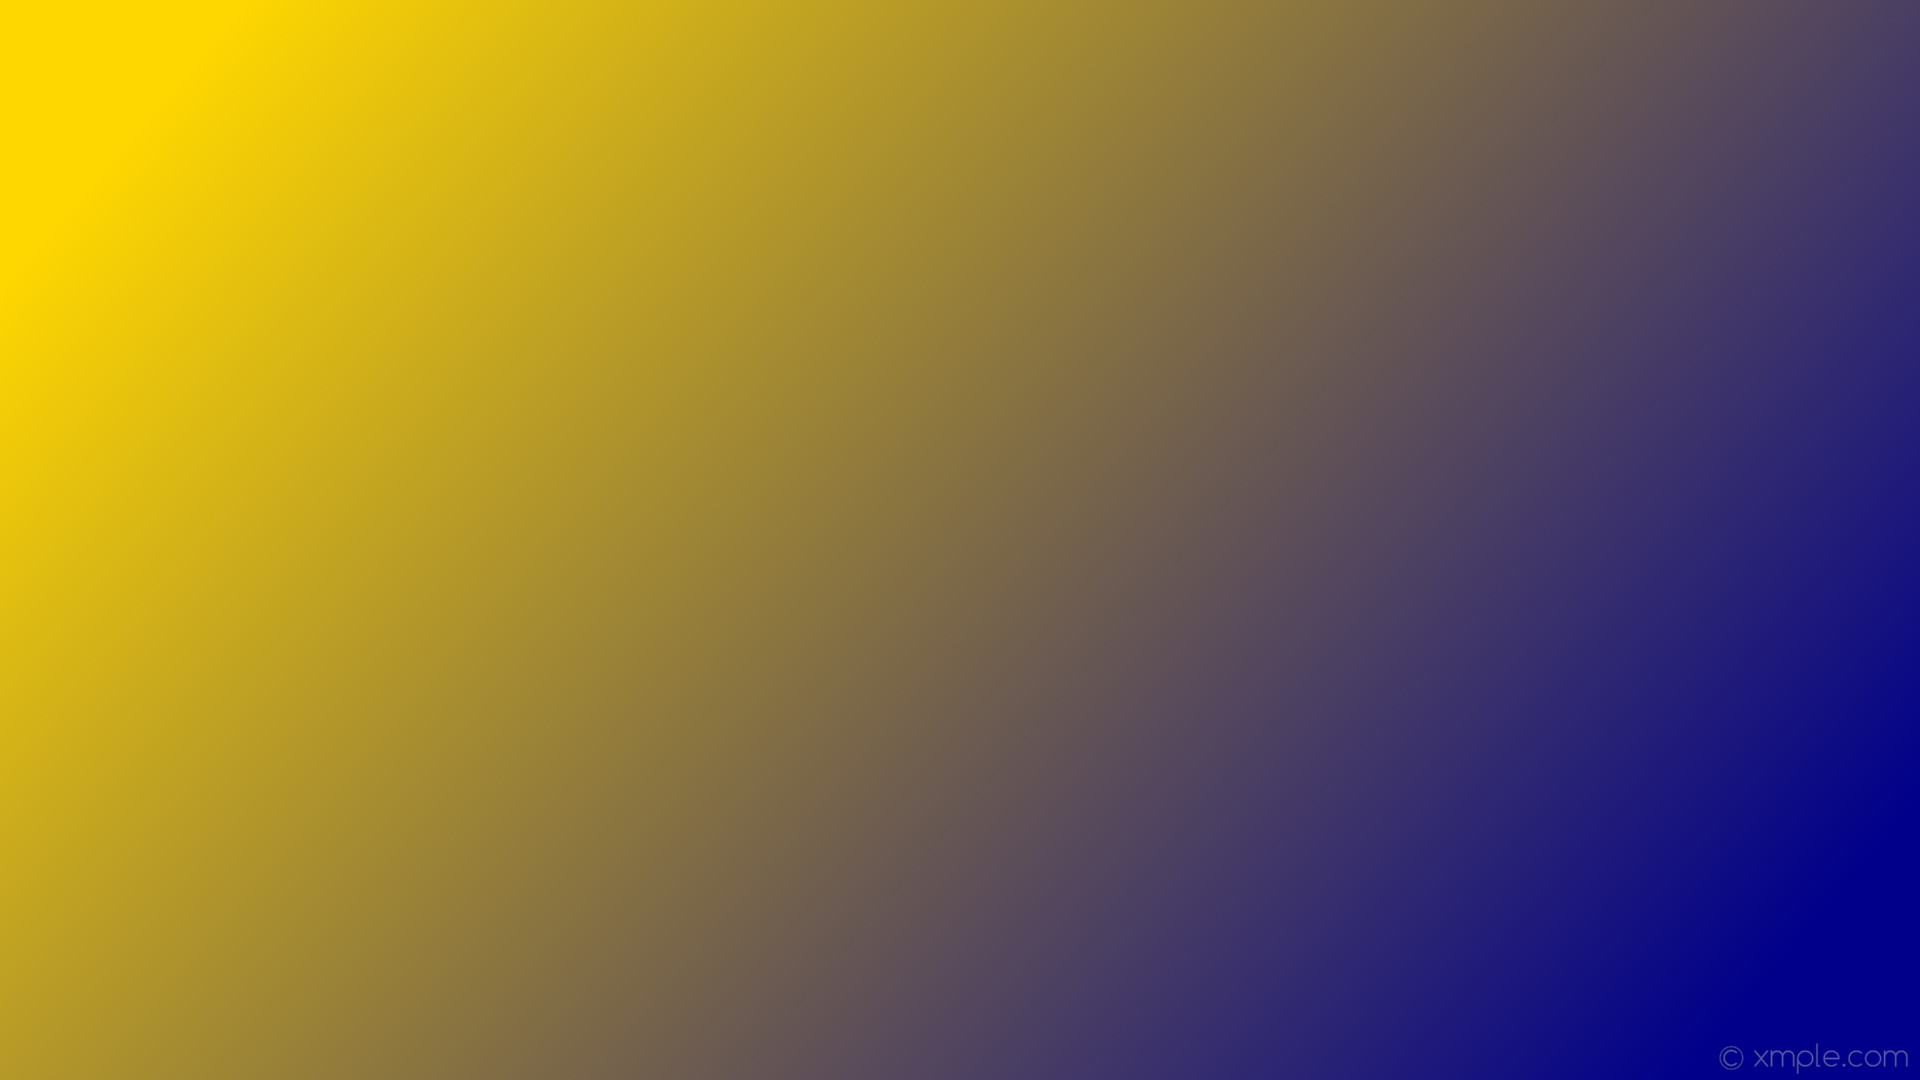 1920x1080 wallpaper linear gradient yellow blue gold dark blue #ffd700 #00008b 165Â°